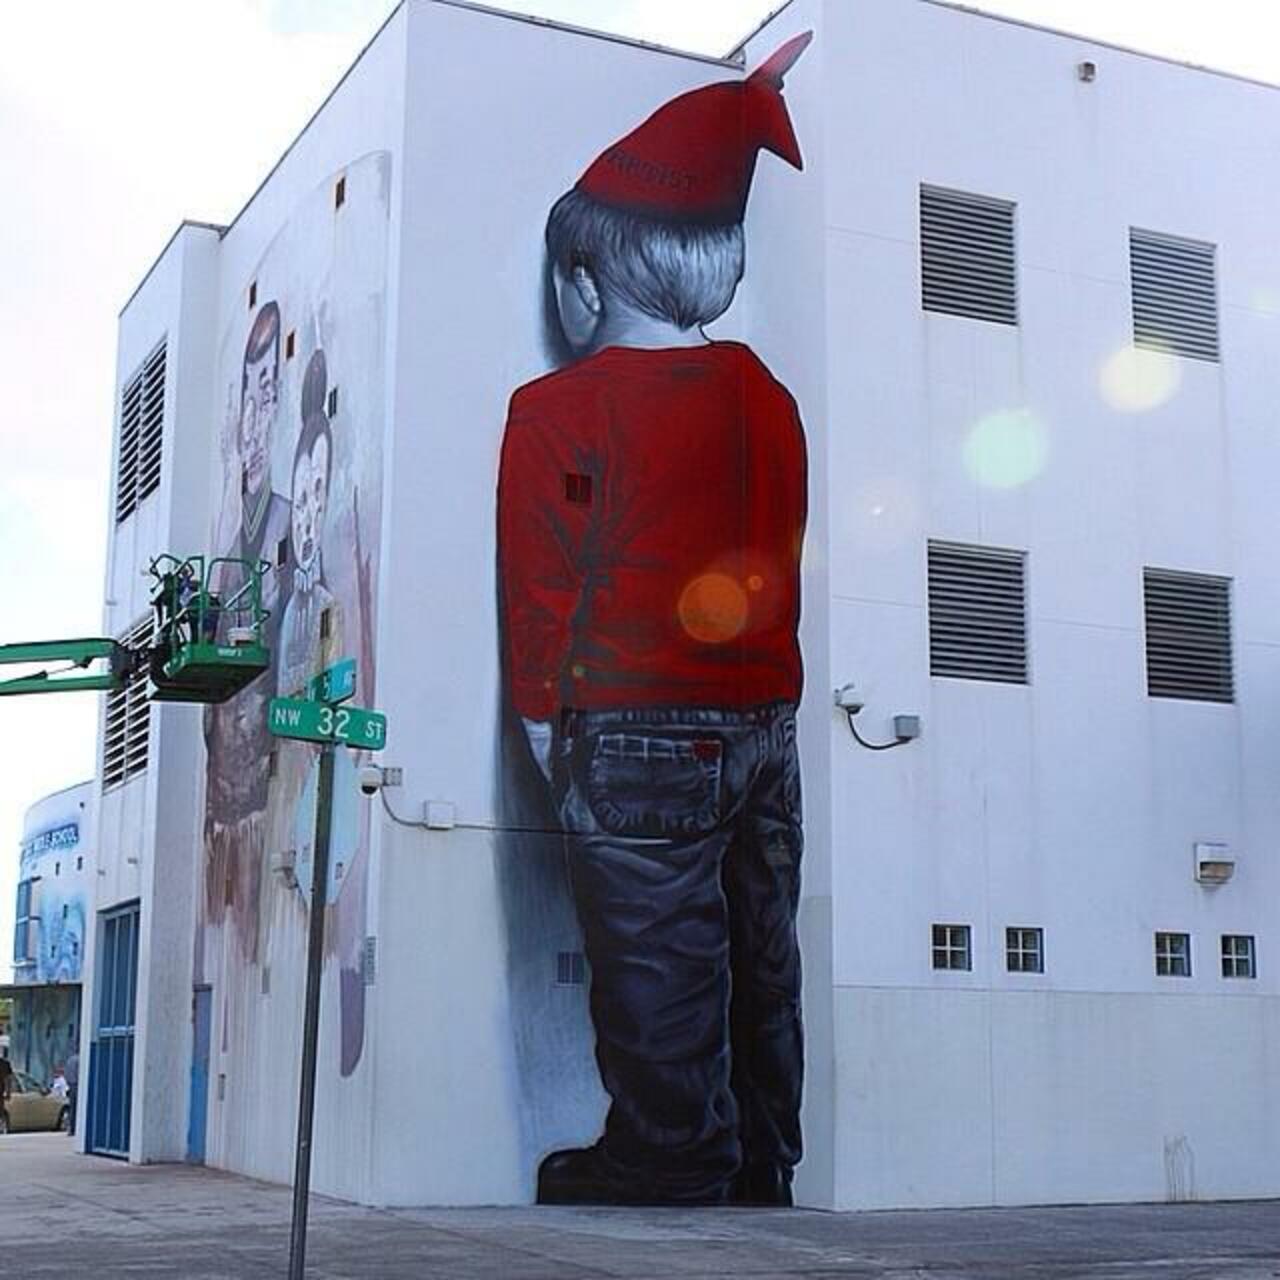 "@GoogleStreetArt: New Street Art by MTO for the Raw Project, in Wynwood, Miami

#art #streetart http://t.co/jVwxQwfyMs"